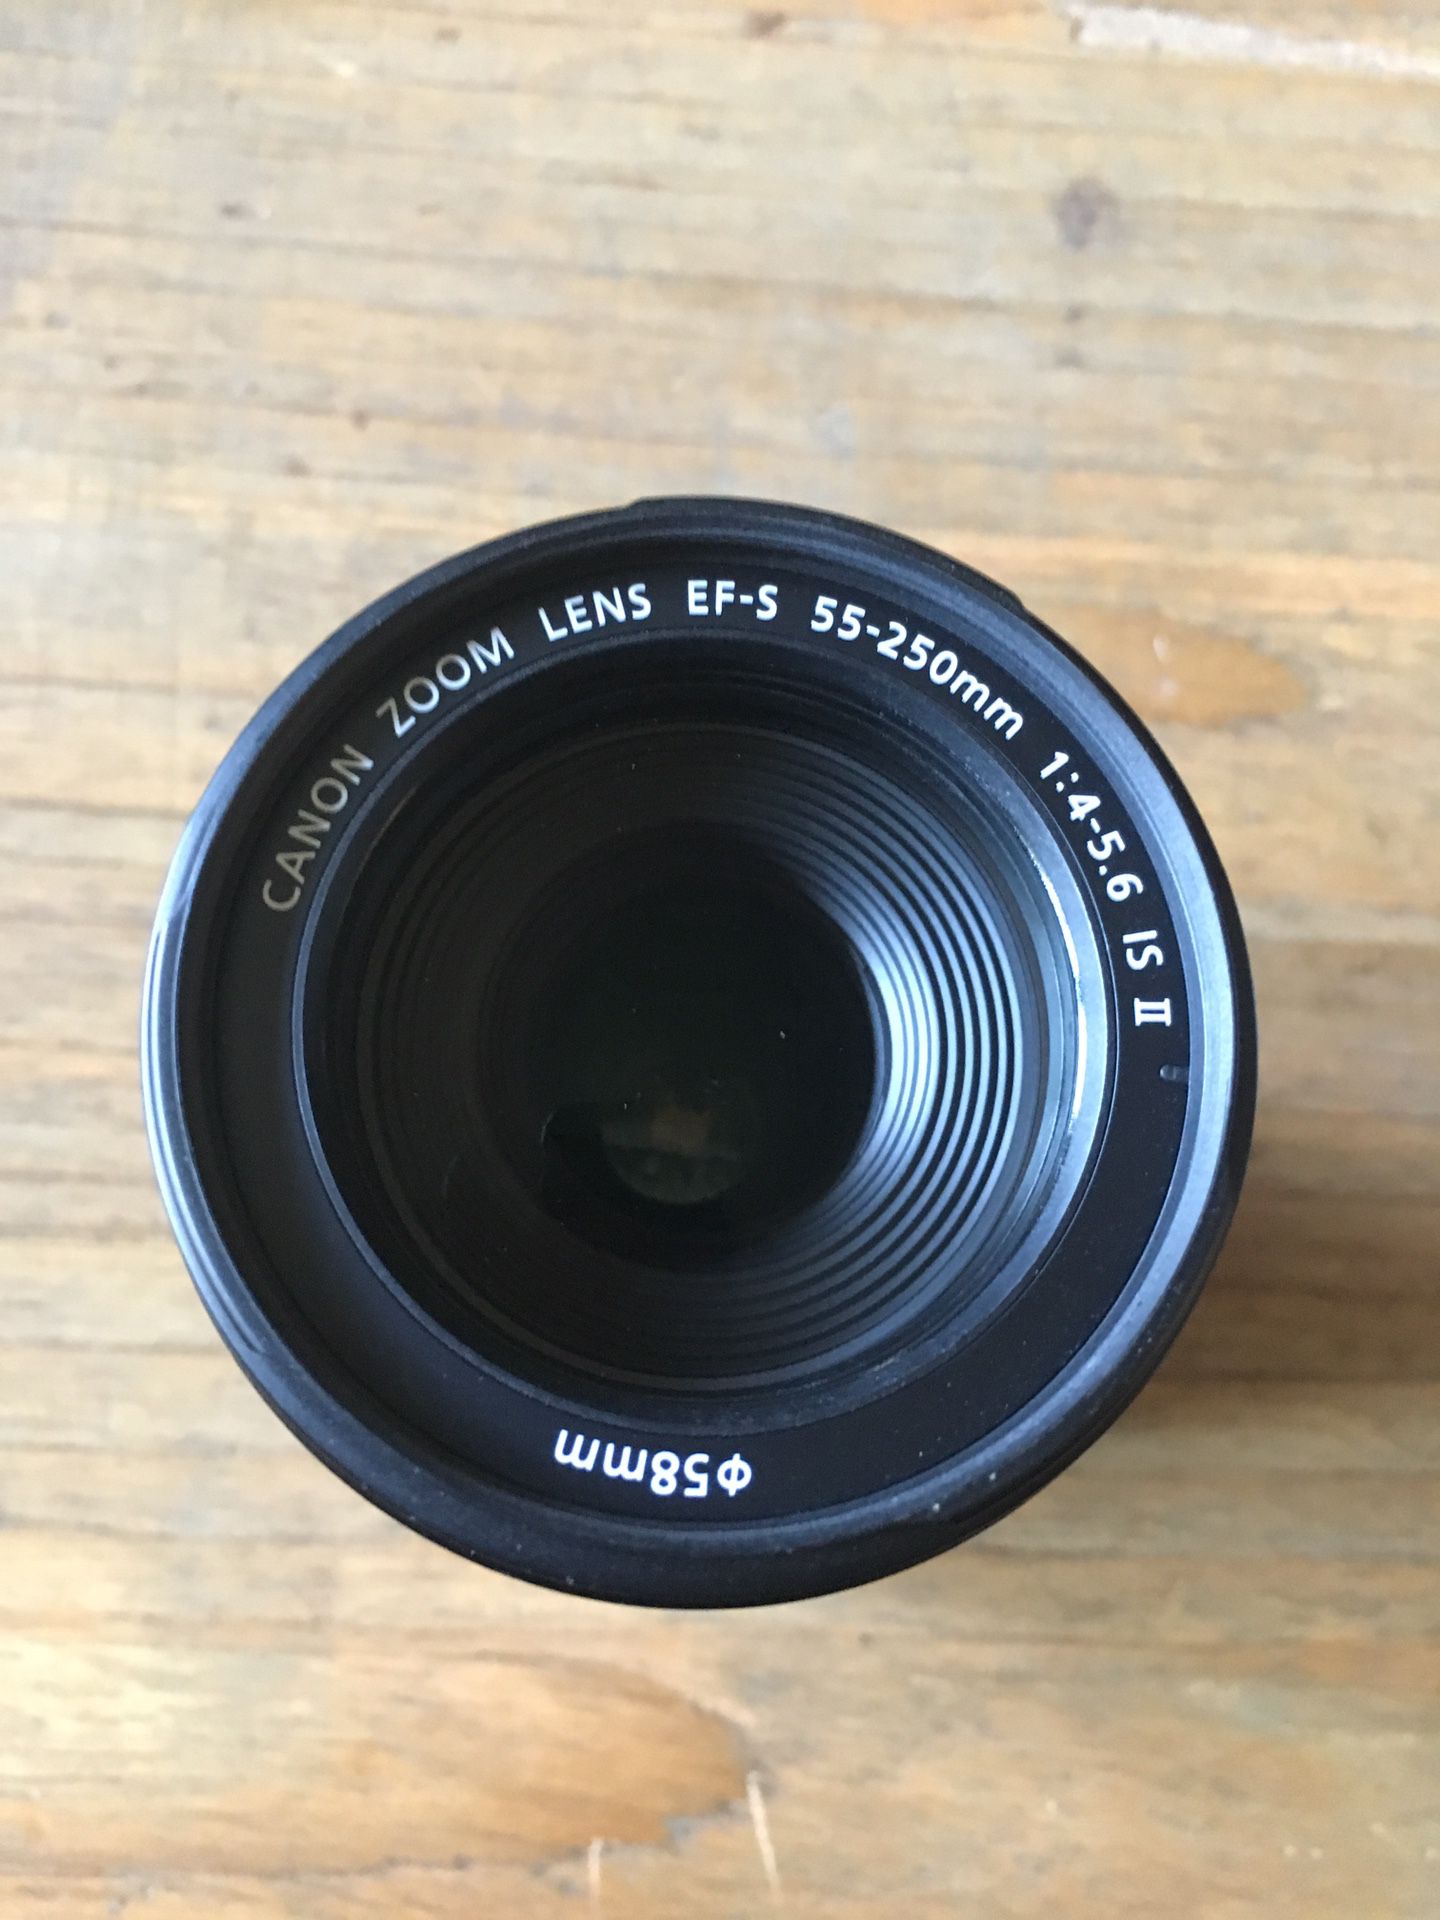 Canon 55-250mm 1:4-5.6 IS II zoom lense.